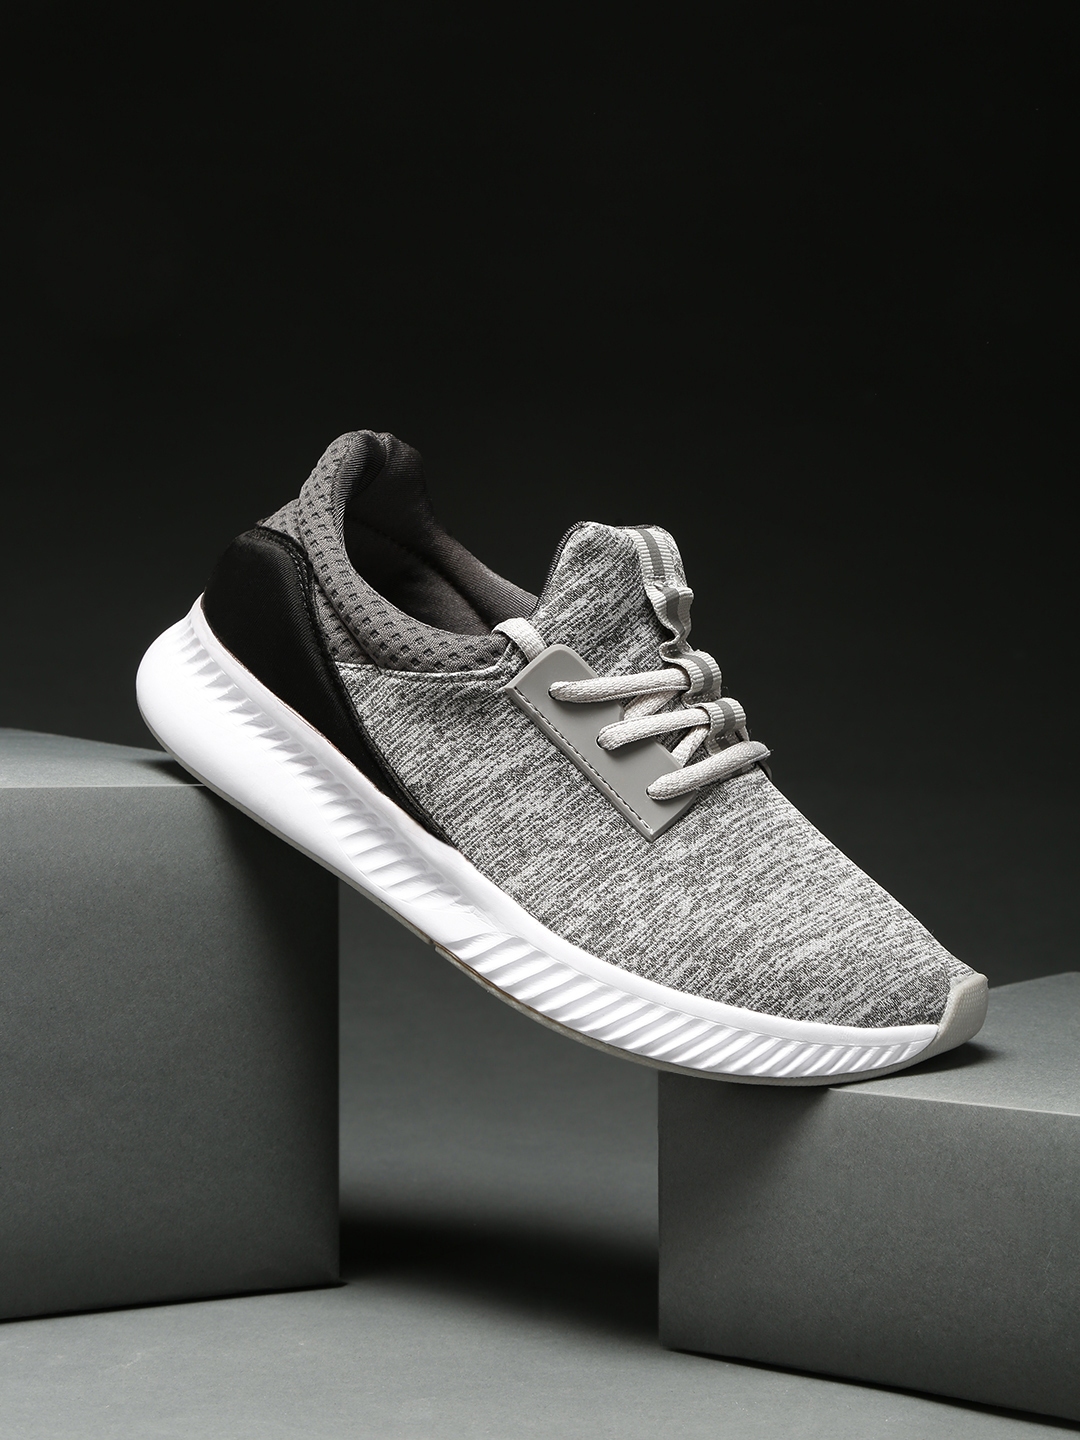 hrx grey sneakers